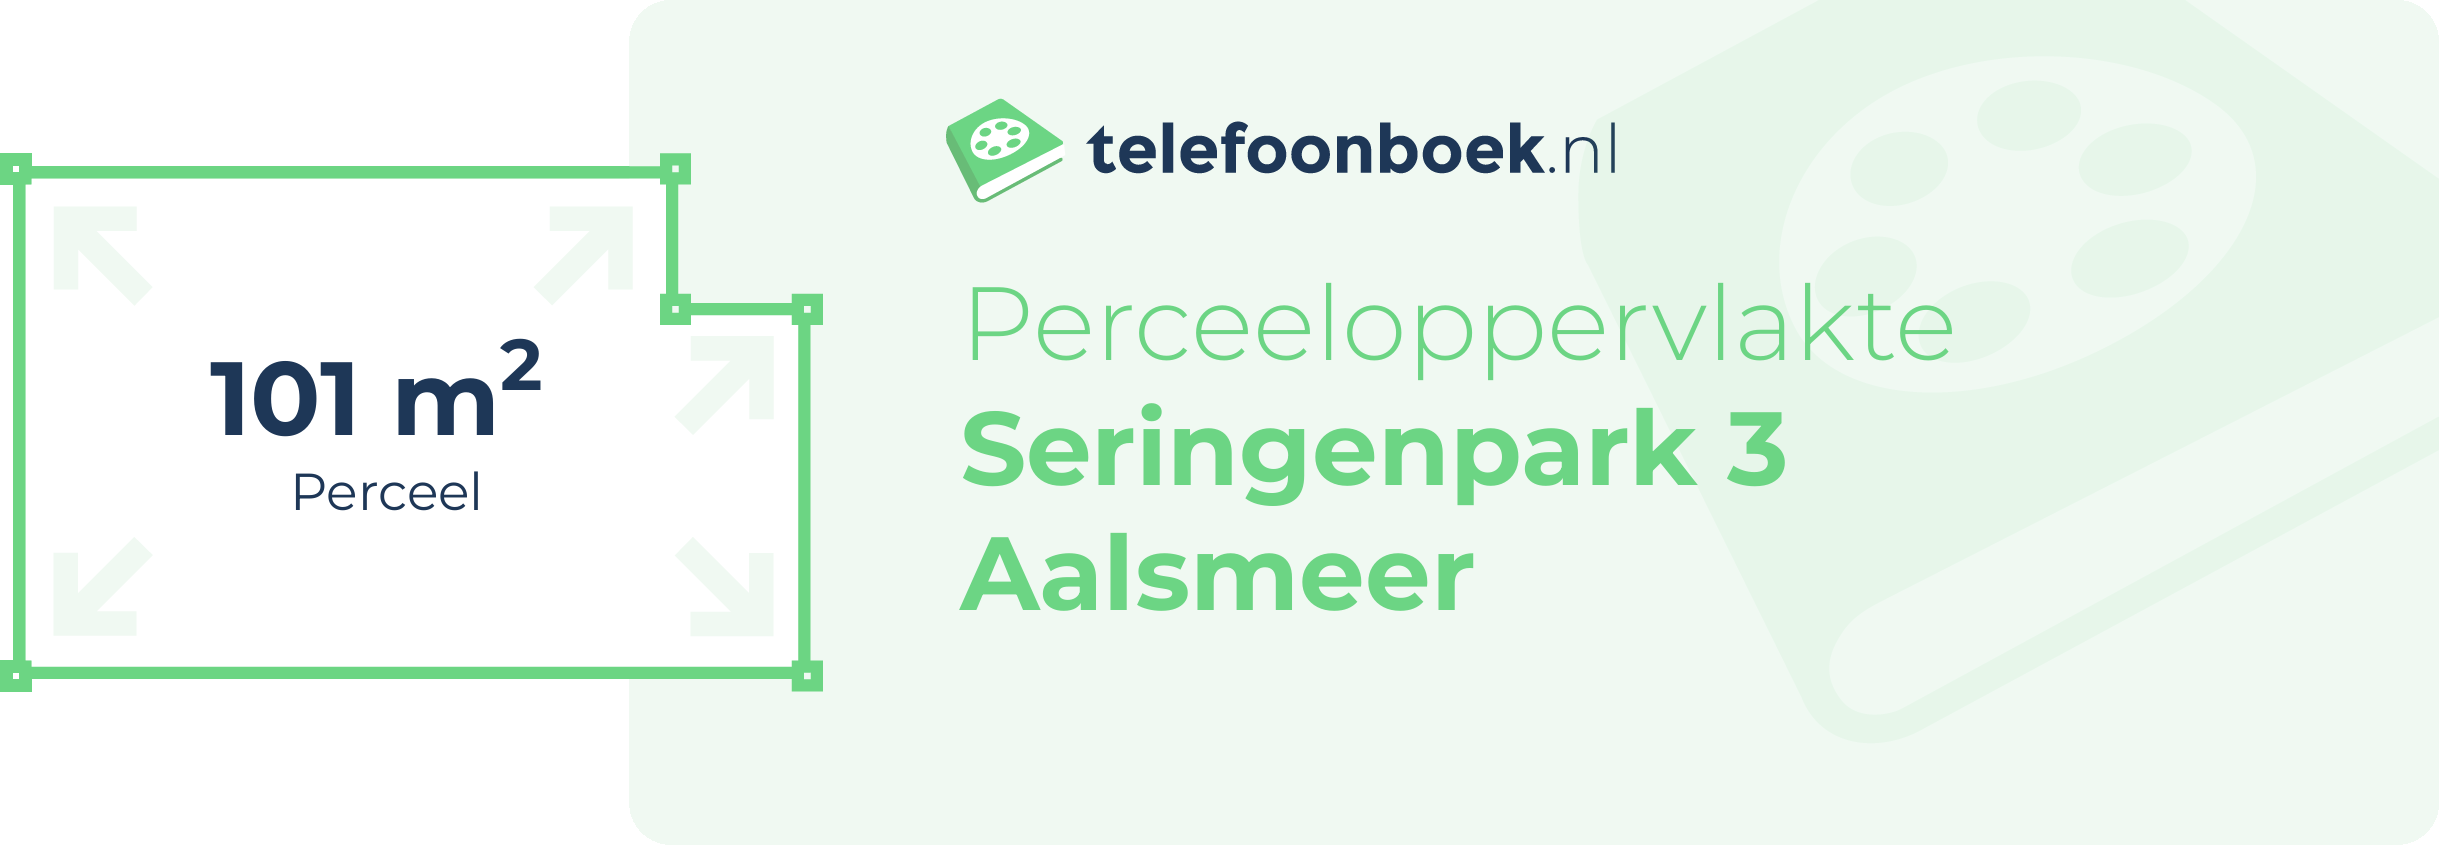 Perceeloppervlakte Seringenpark 3 Aalsmeer